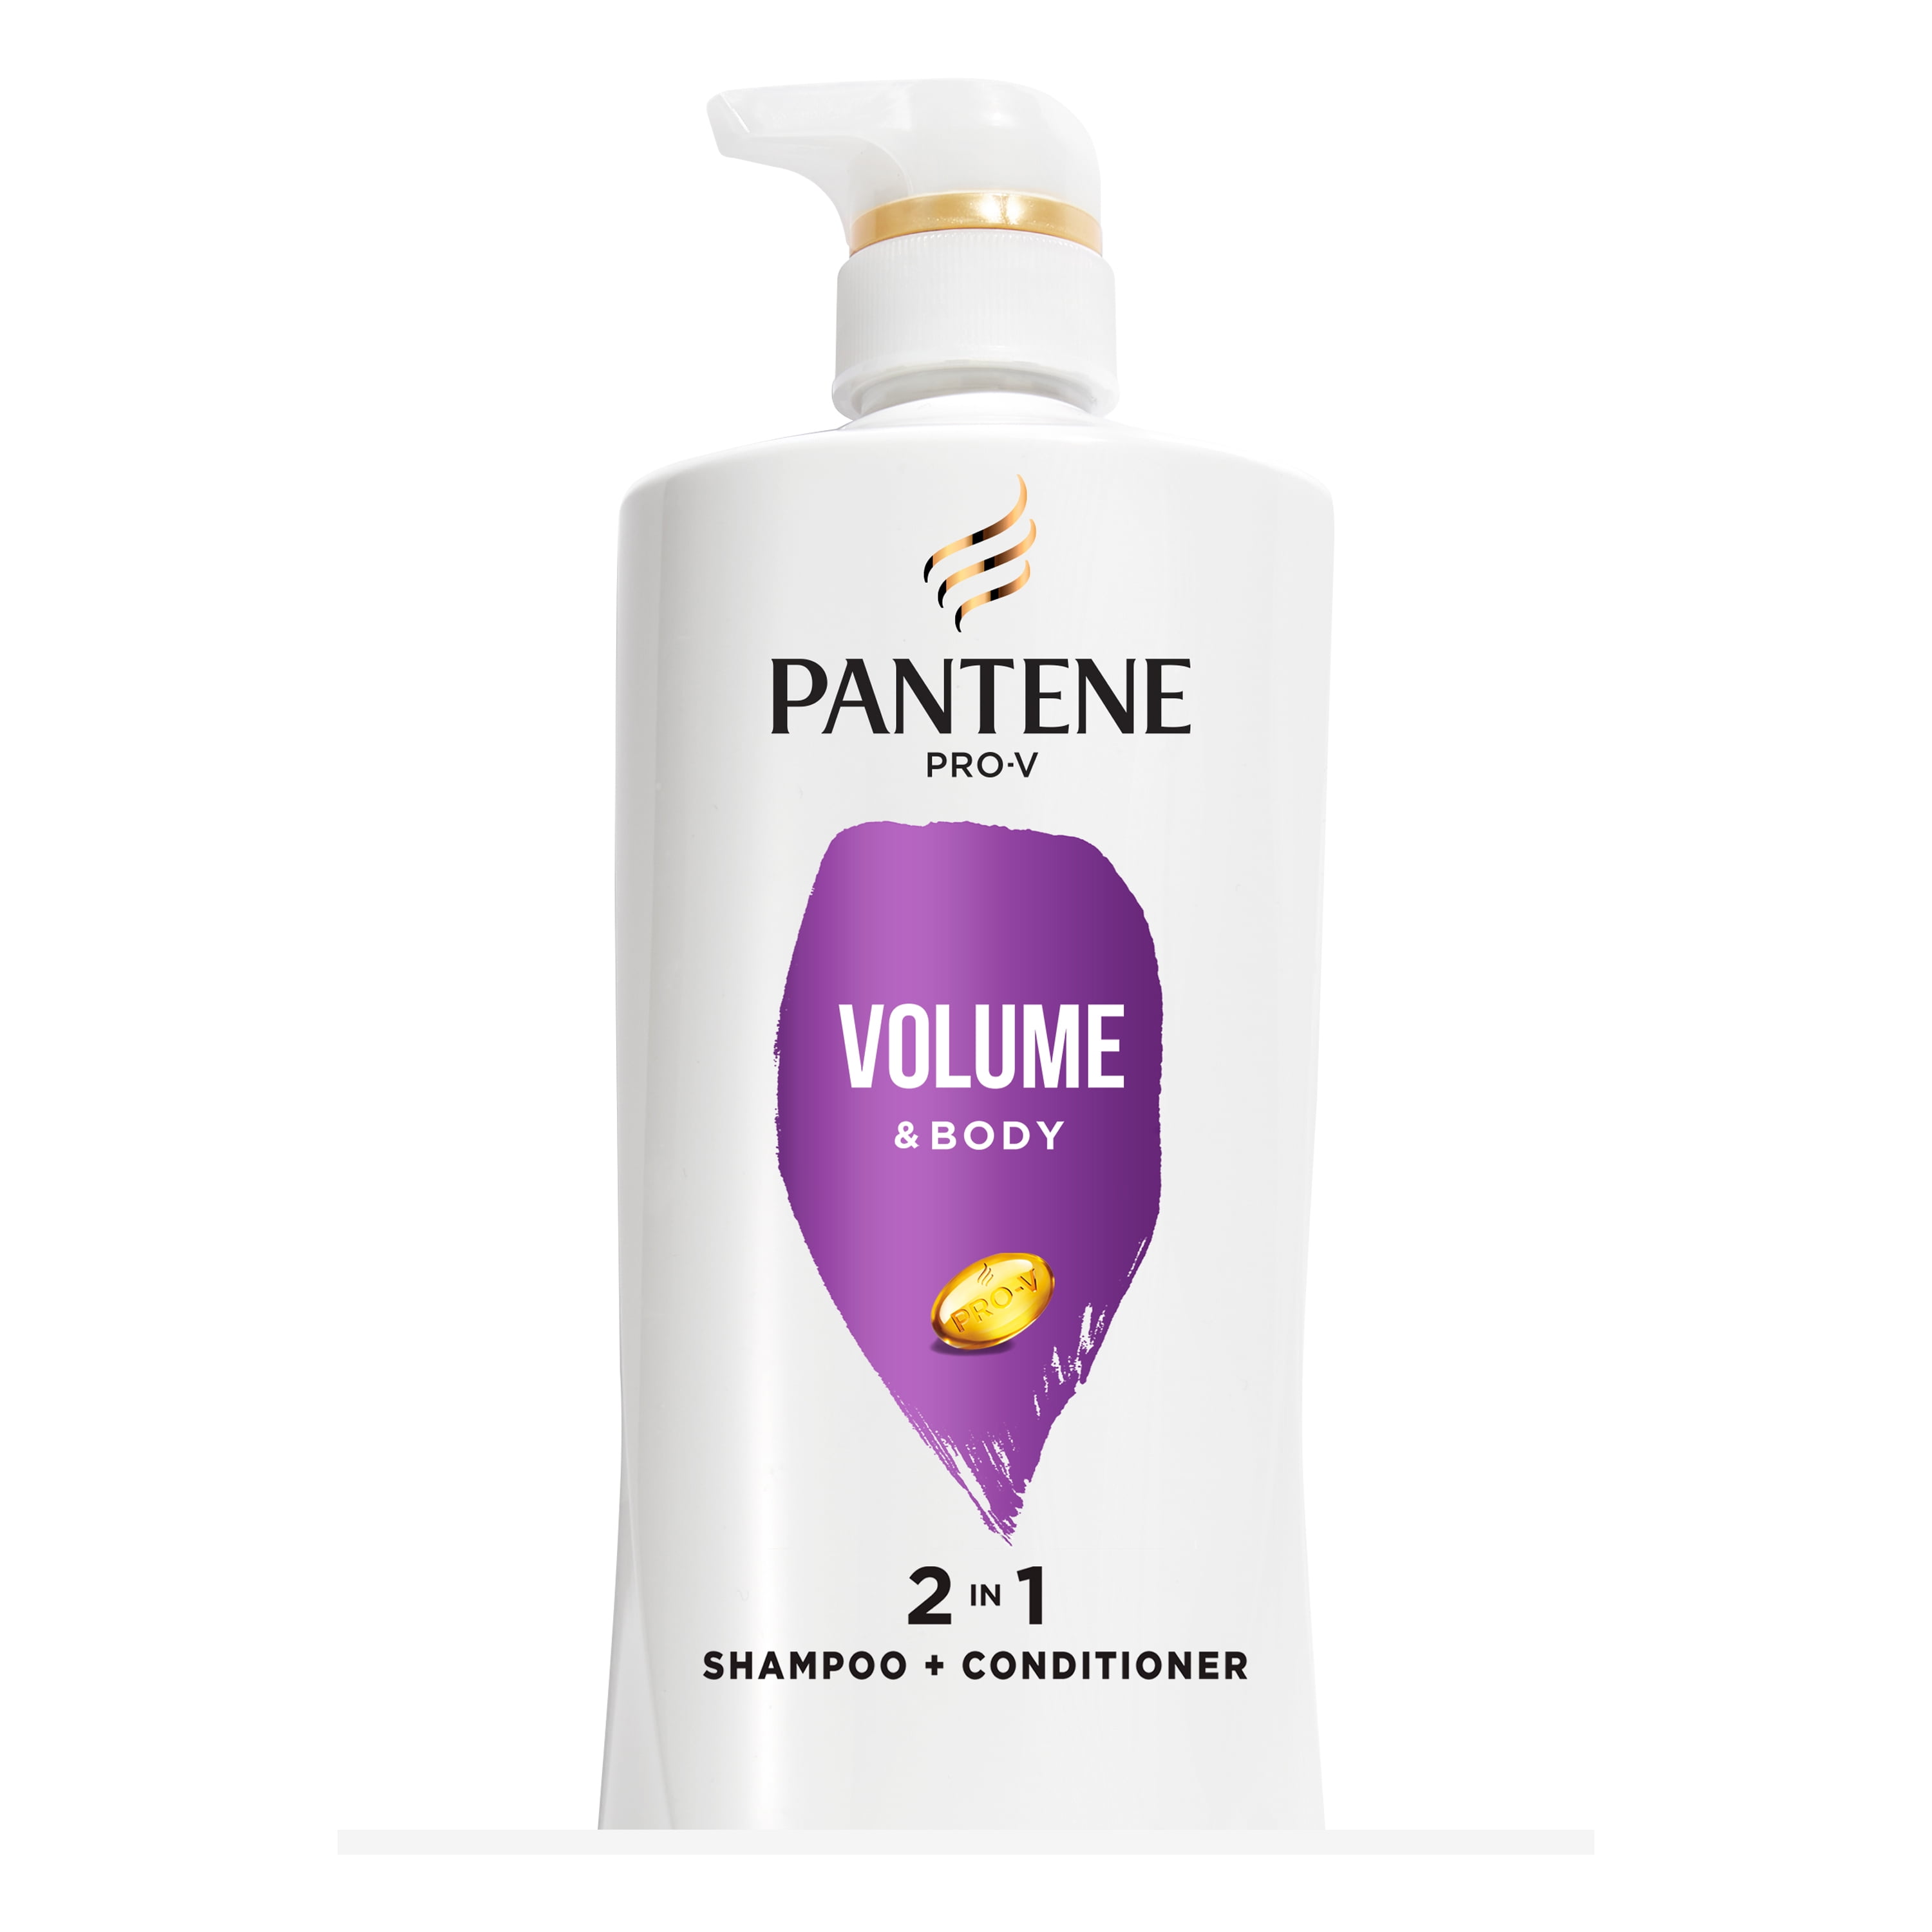 Pantene Pro-V Volume Body 2in1 Shampoo + Conditioner, 17.9oz - Walmart.com